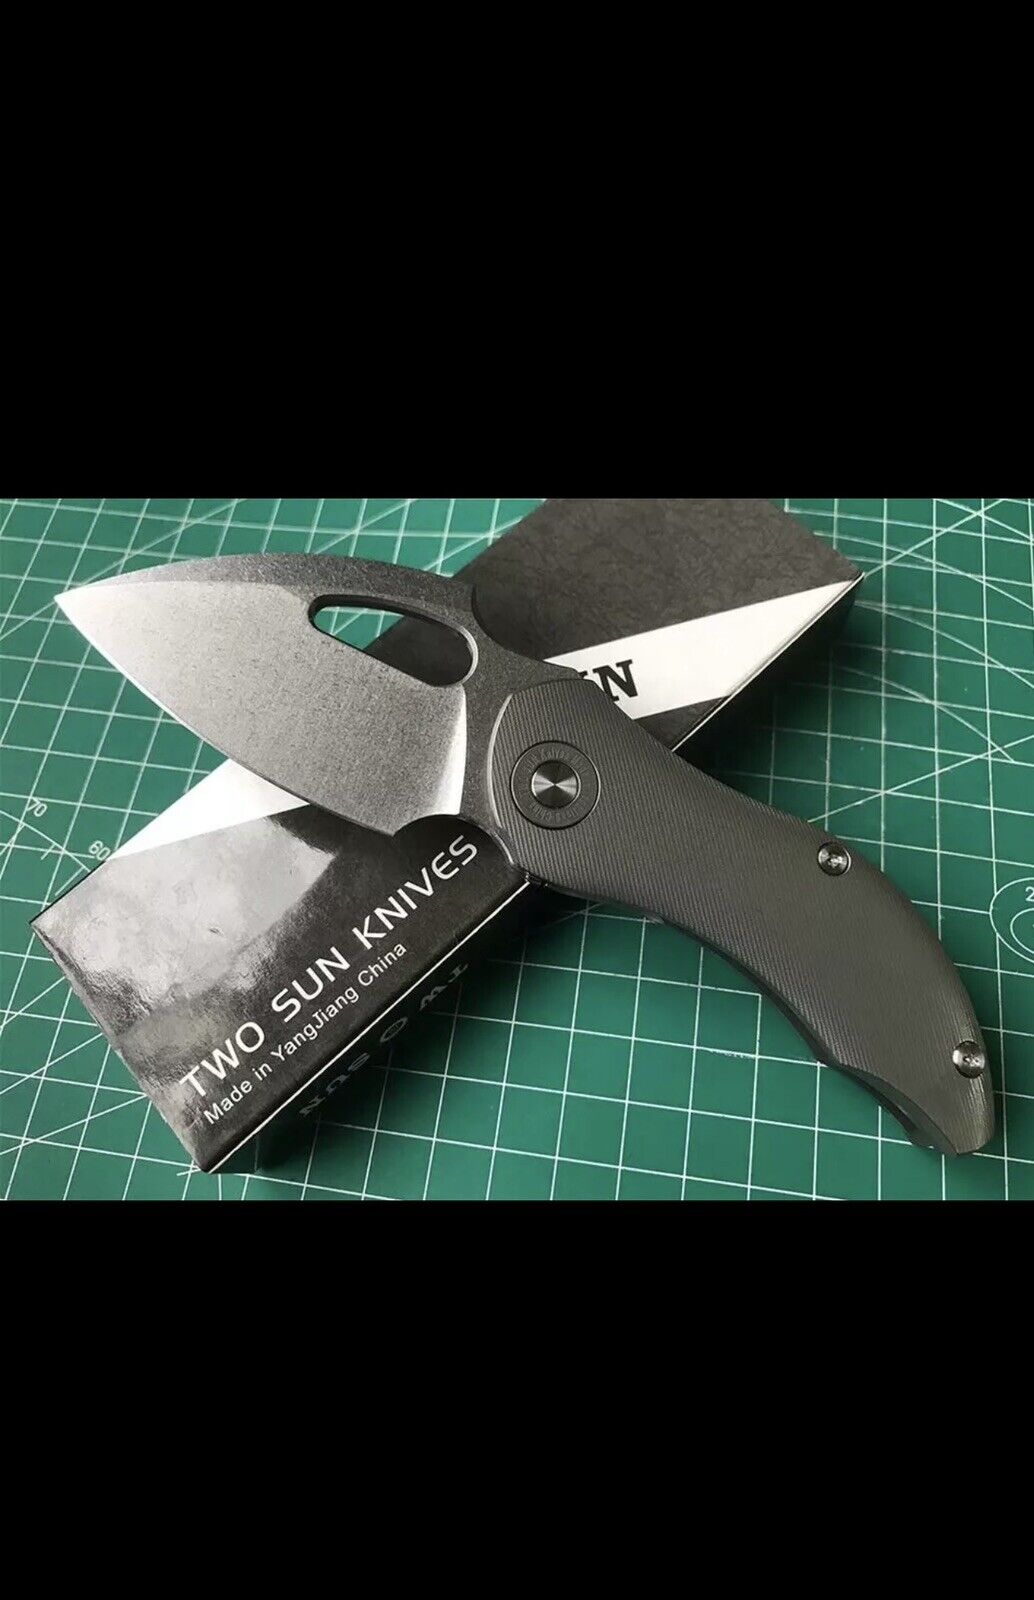 TWOSUN Folding Knife Titanium Handle TS230-14C28N US SELLER FAST SHIPPING